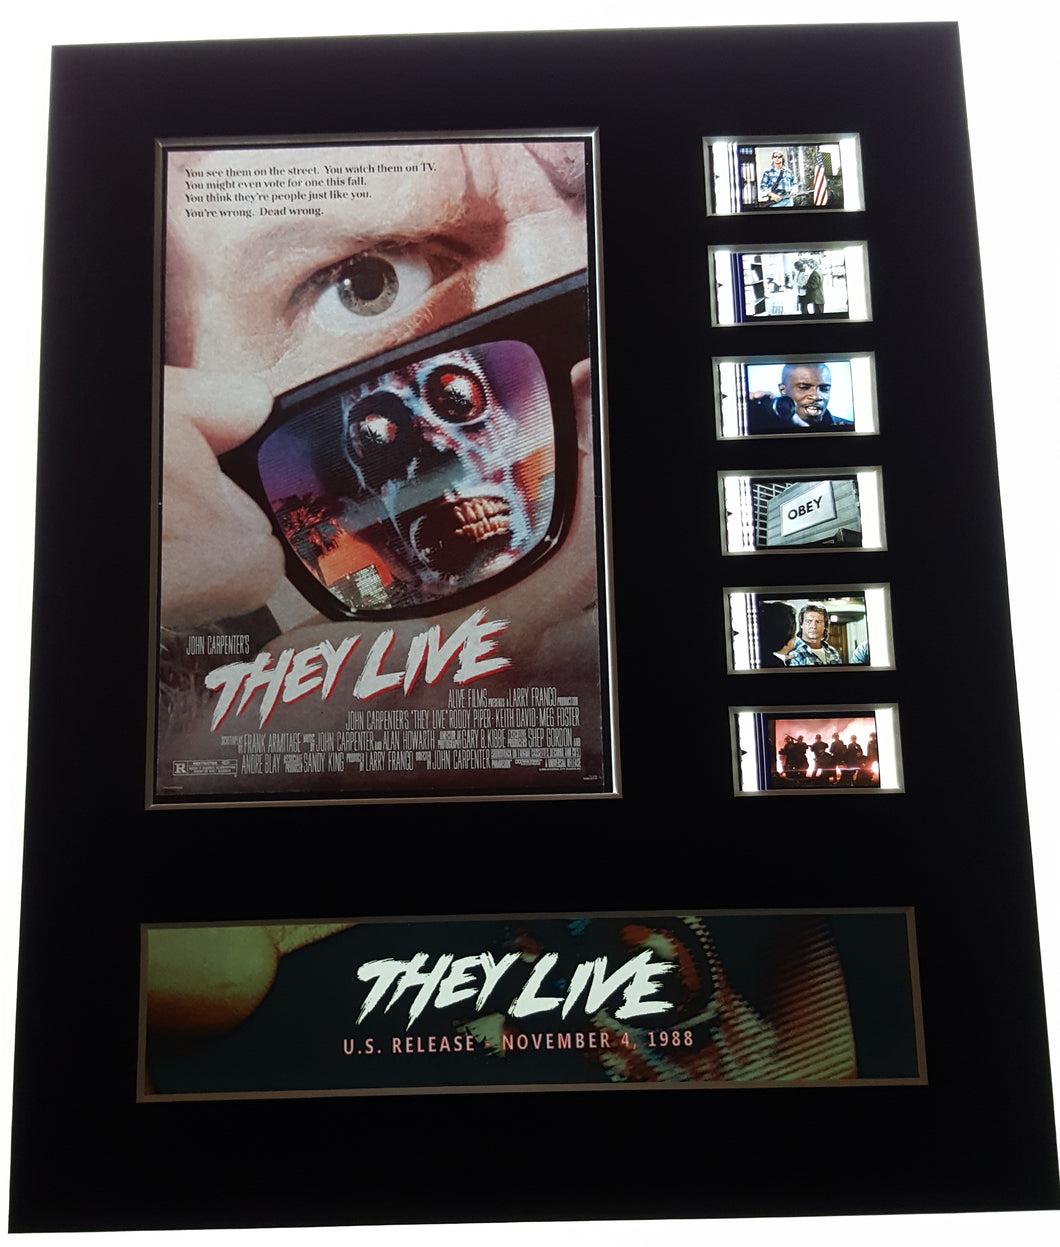 THEY LIVE John Carpenter Roddy Piper 35mm Movie Film Cell Display 8x10 Presentation Horror